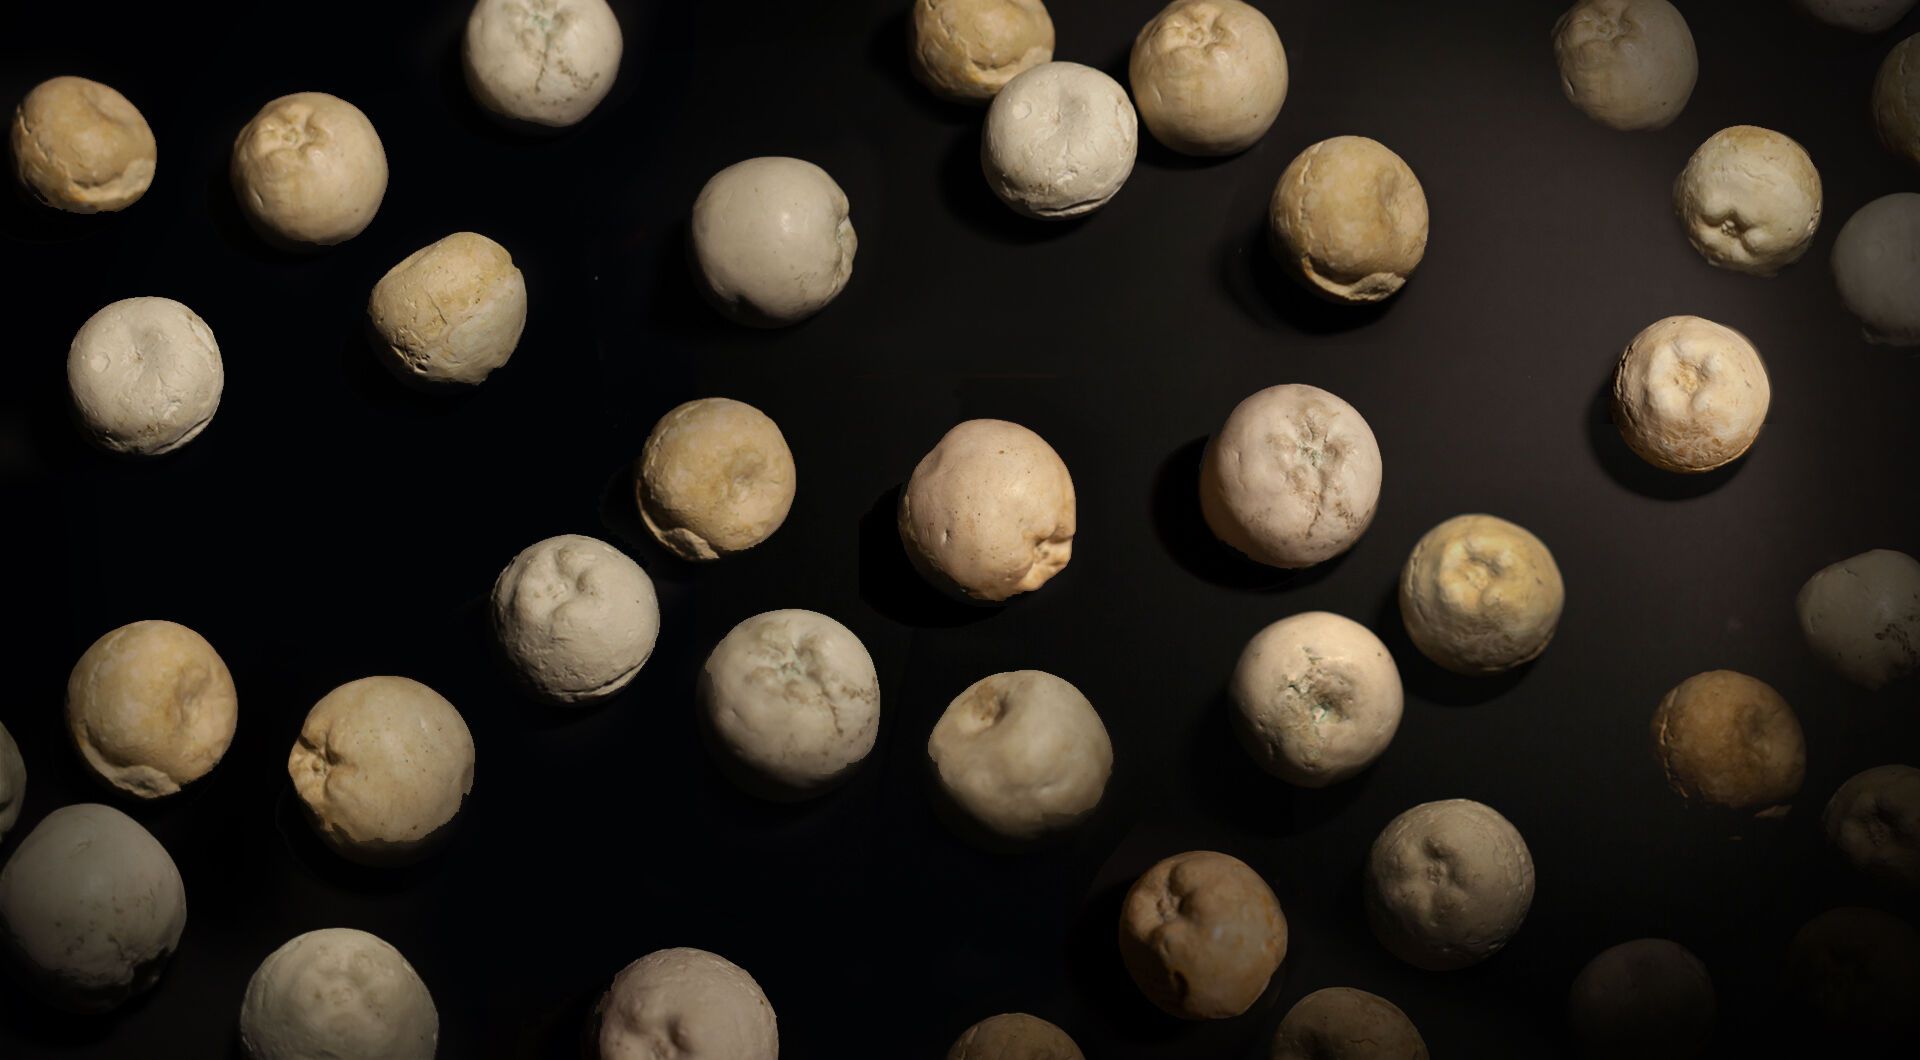 Ewa Lisiak - Conservation and Restoration of Art - madonna apples